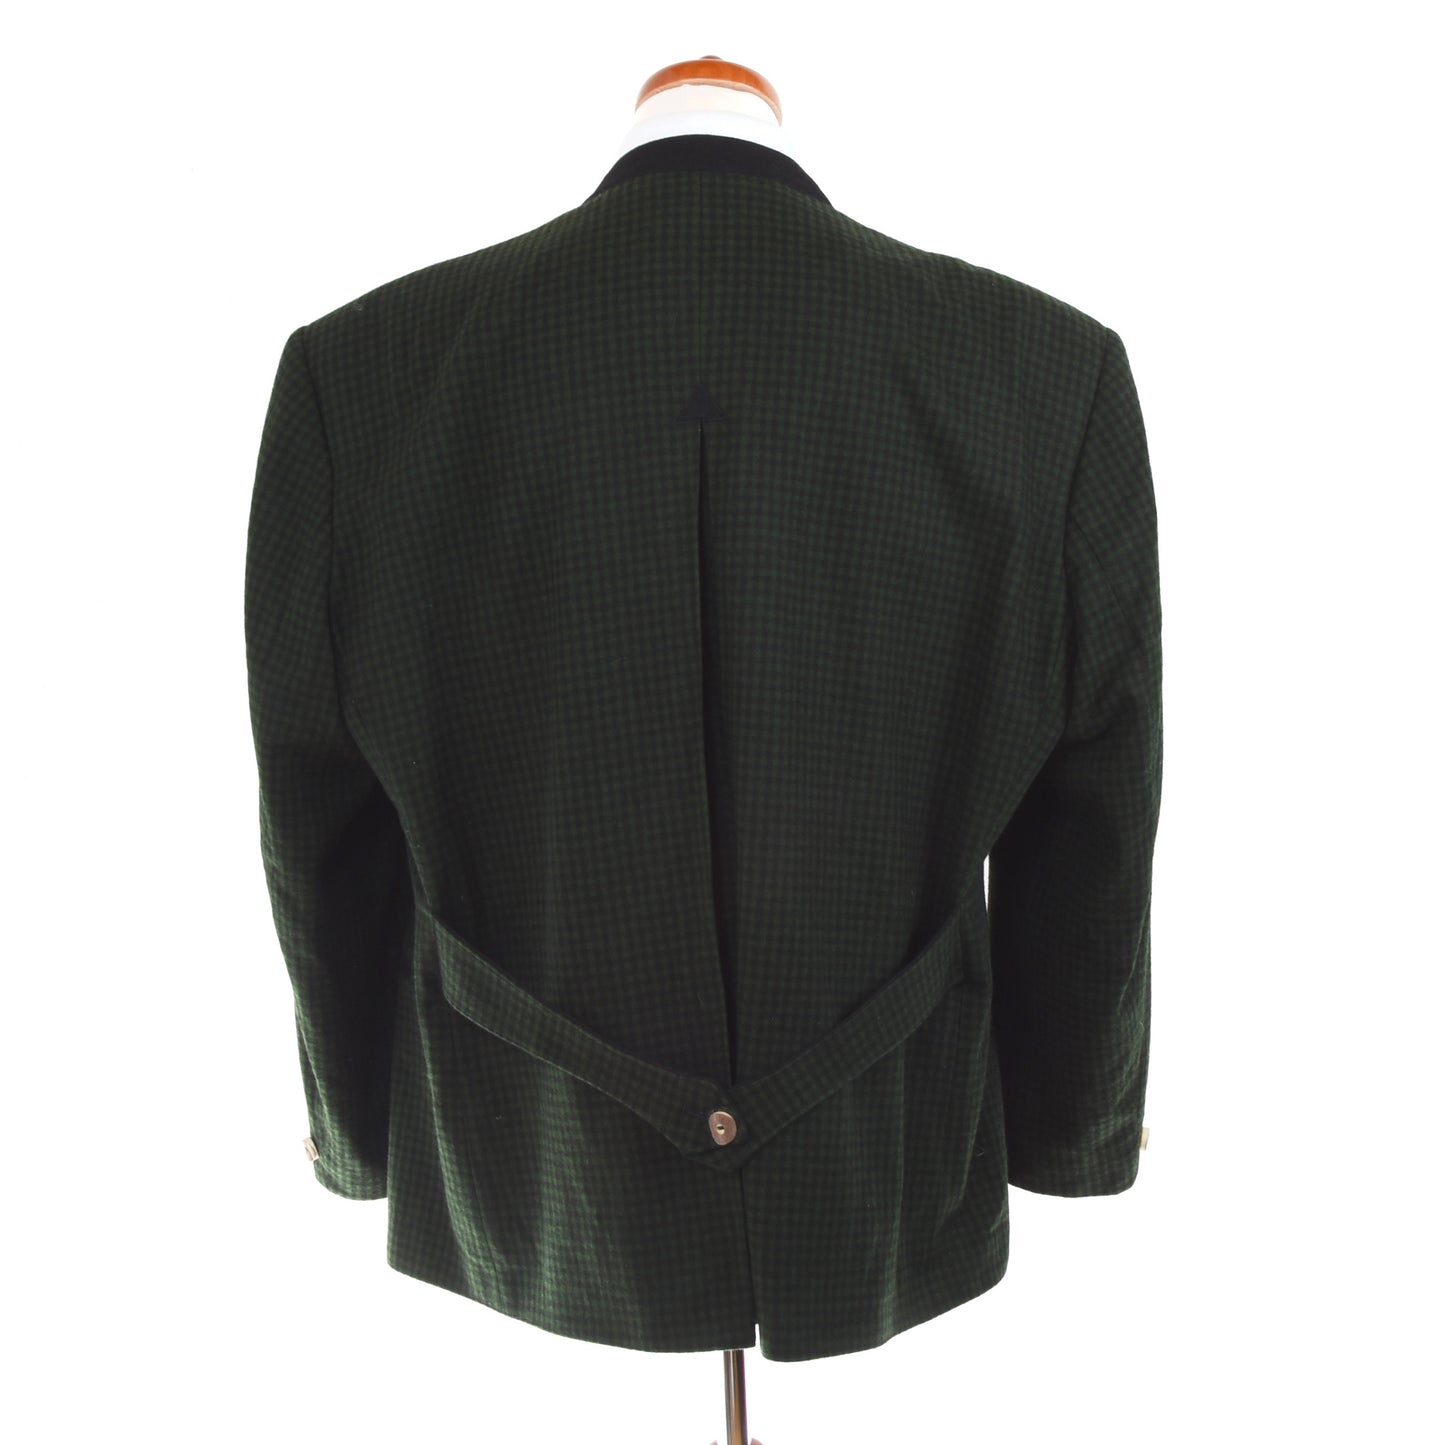 Seidl Wool Janker/Jacket Size 56 - Rosegger Green/Black